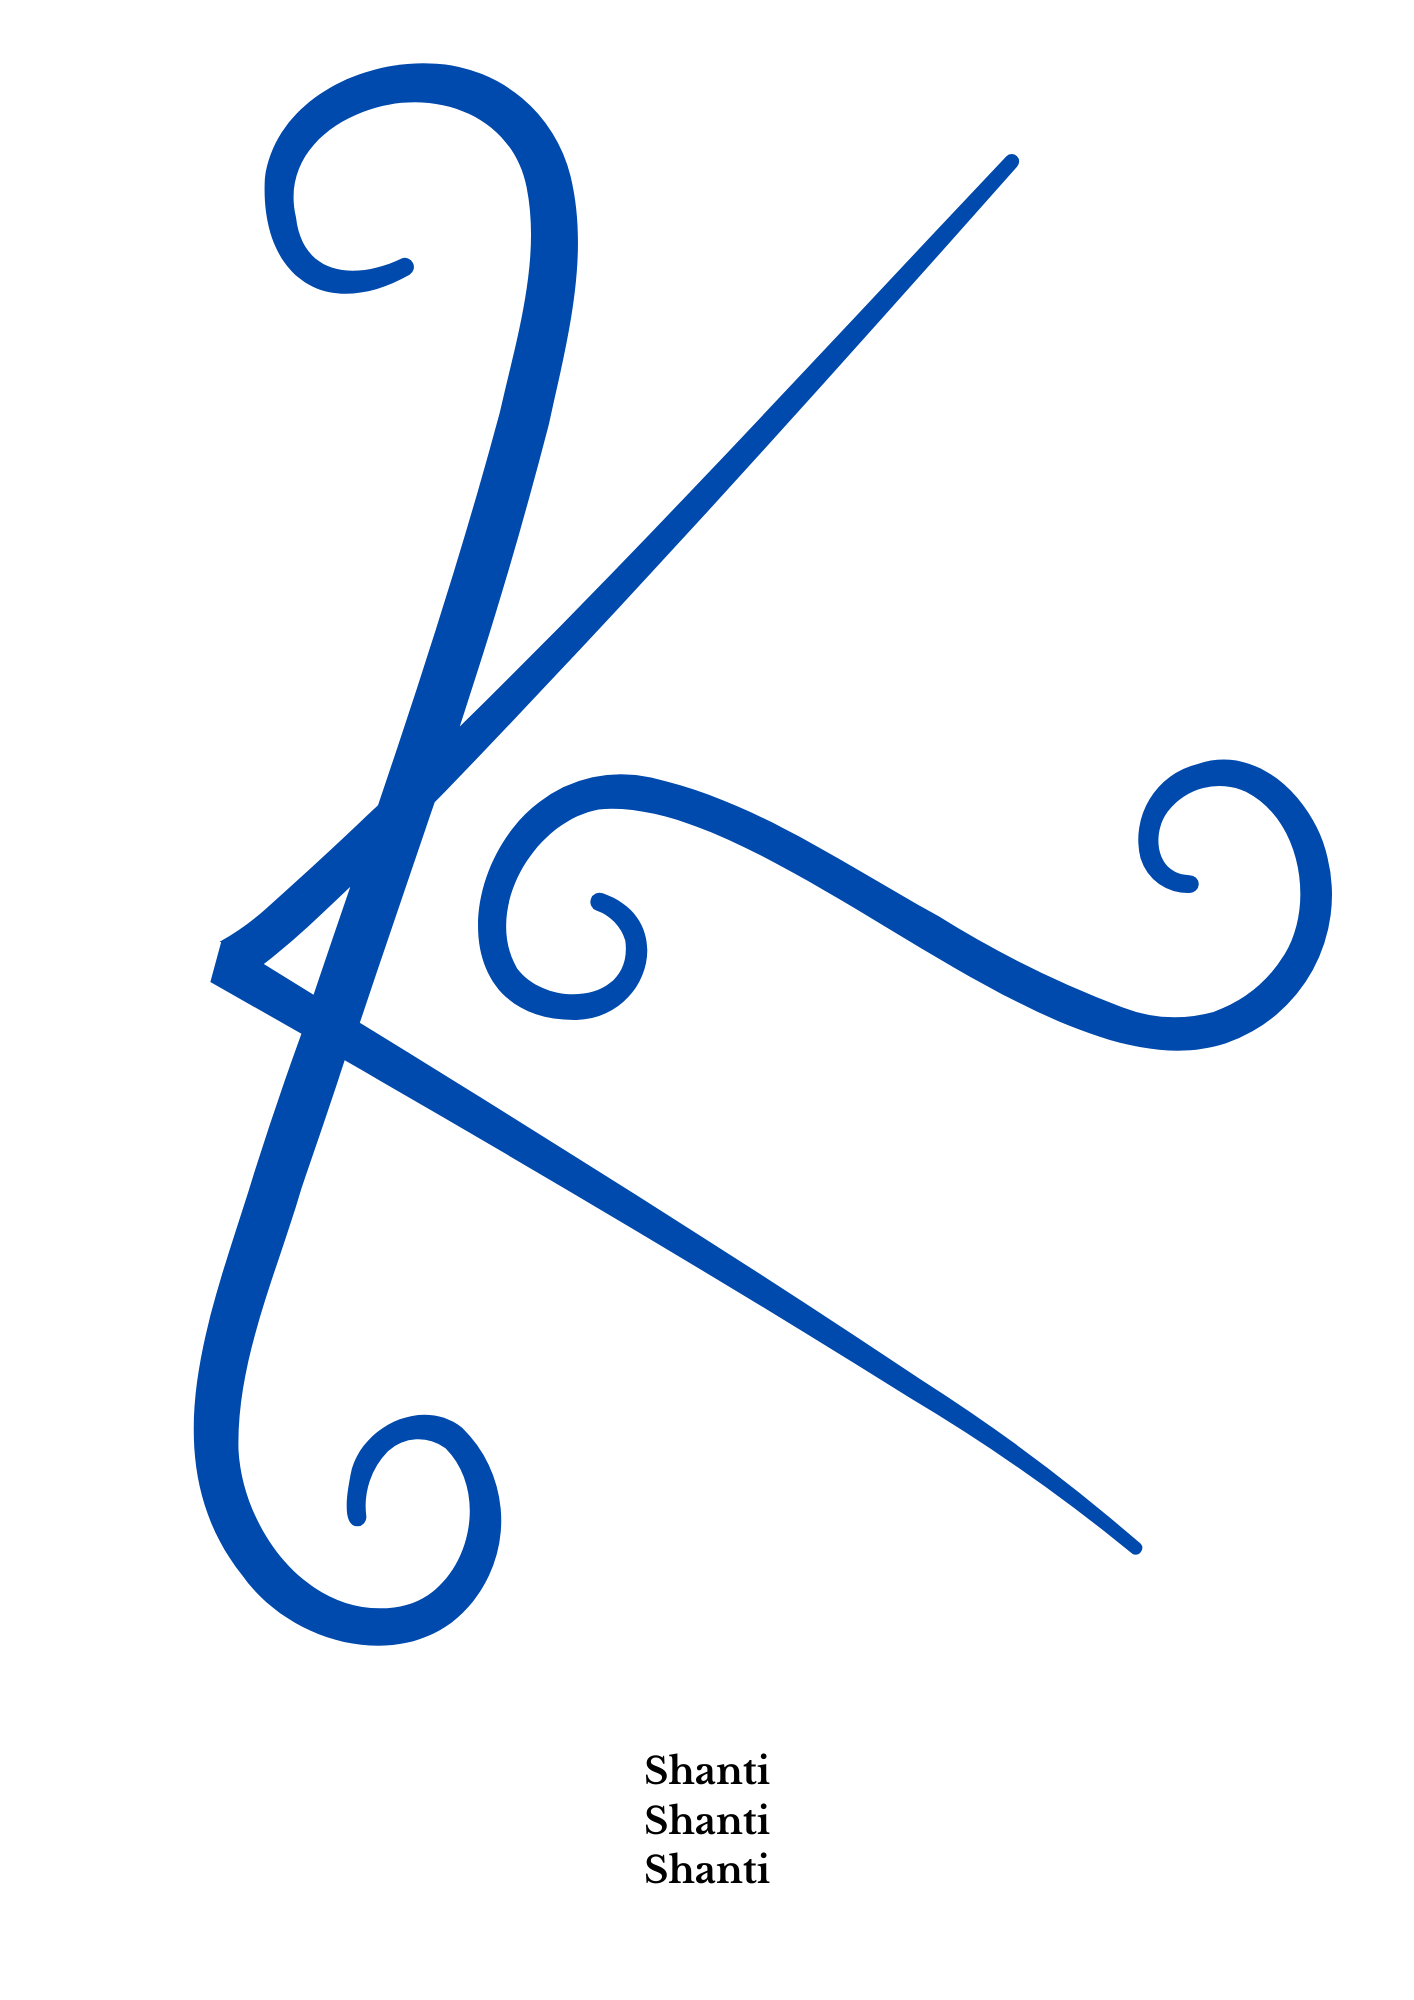 simbolos karuna - shanti